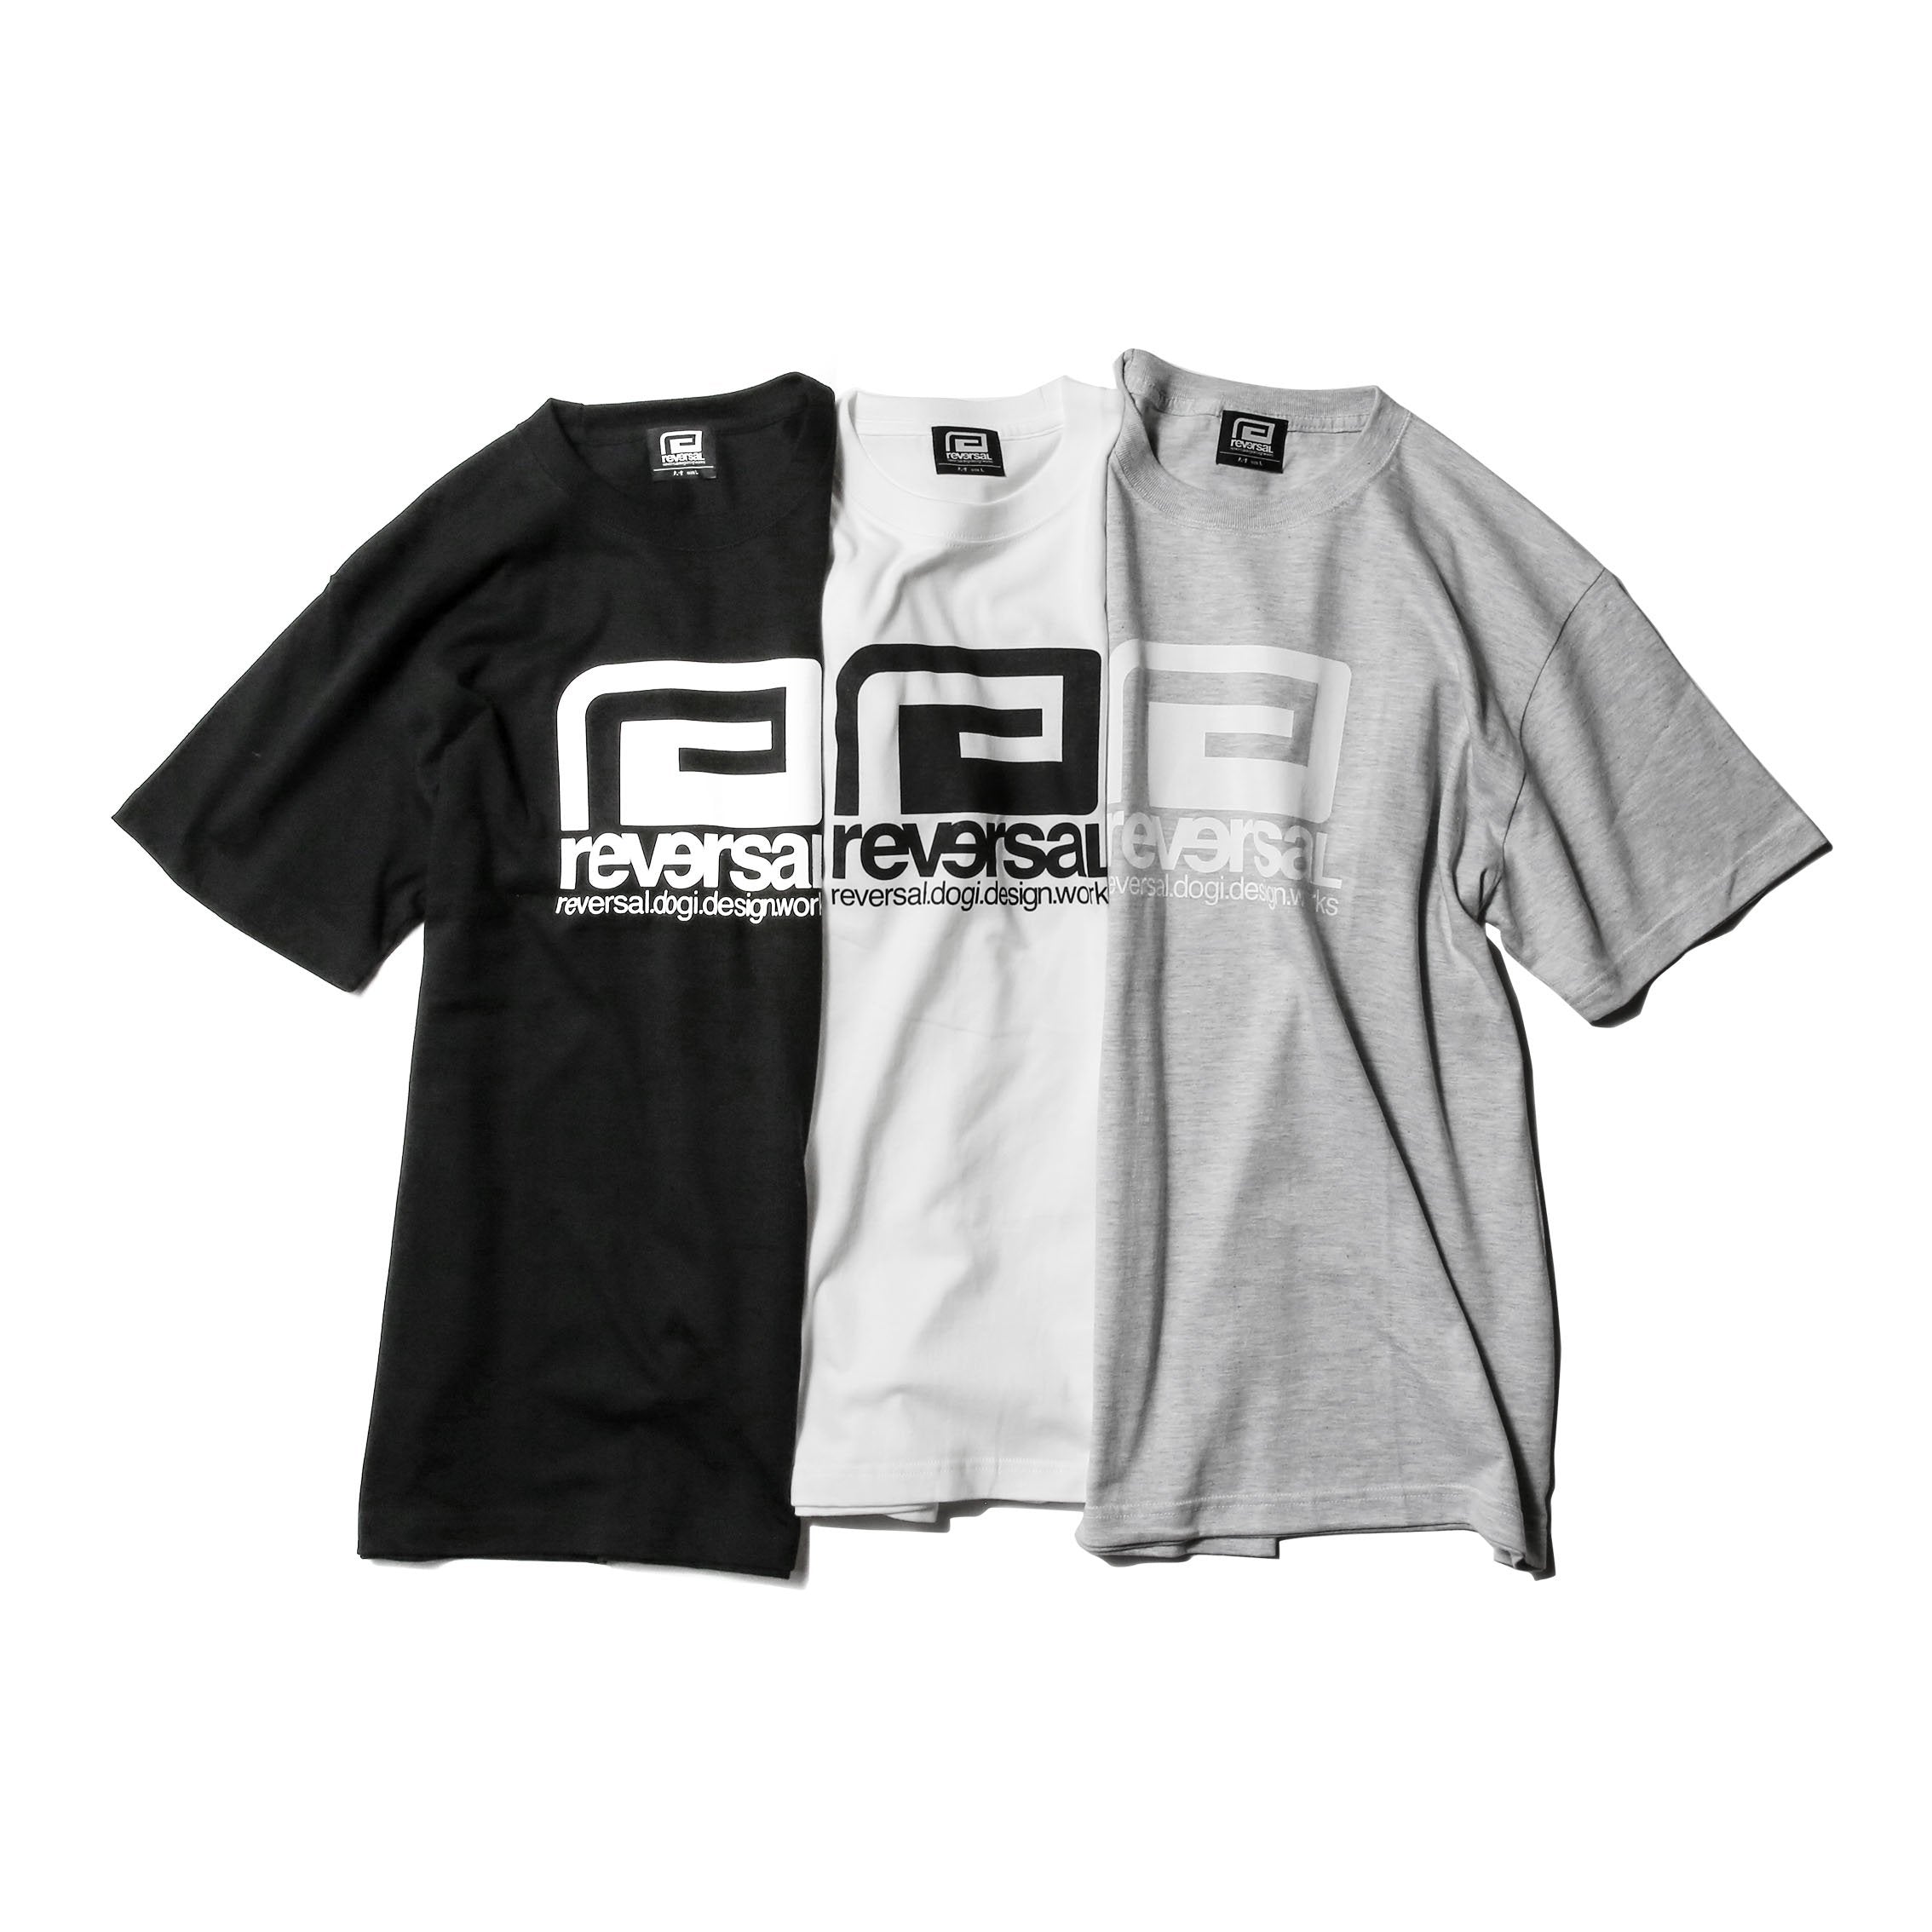 RVDDW Big Mark T-Shirt-Reversal RVDDW-ChokeSports